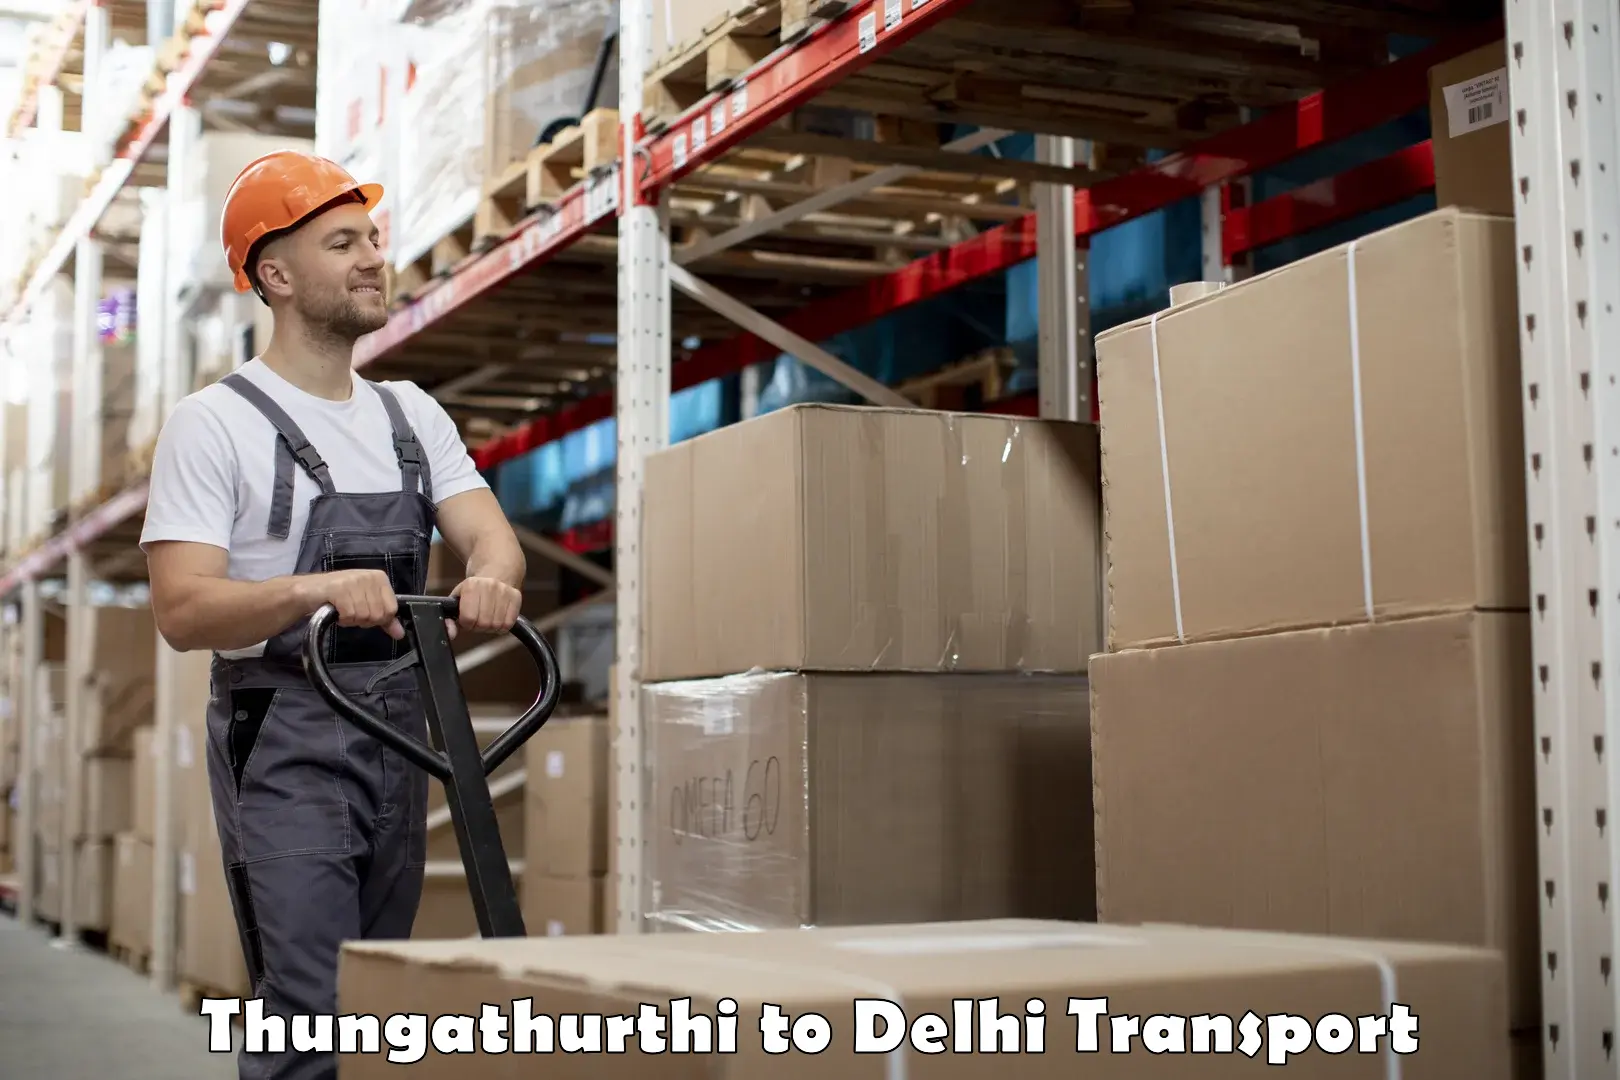 Nationwide transport services Thungathurthi to Delhi